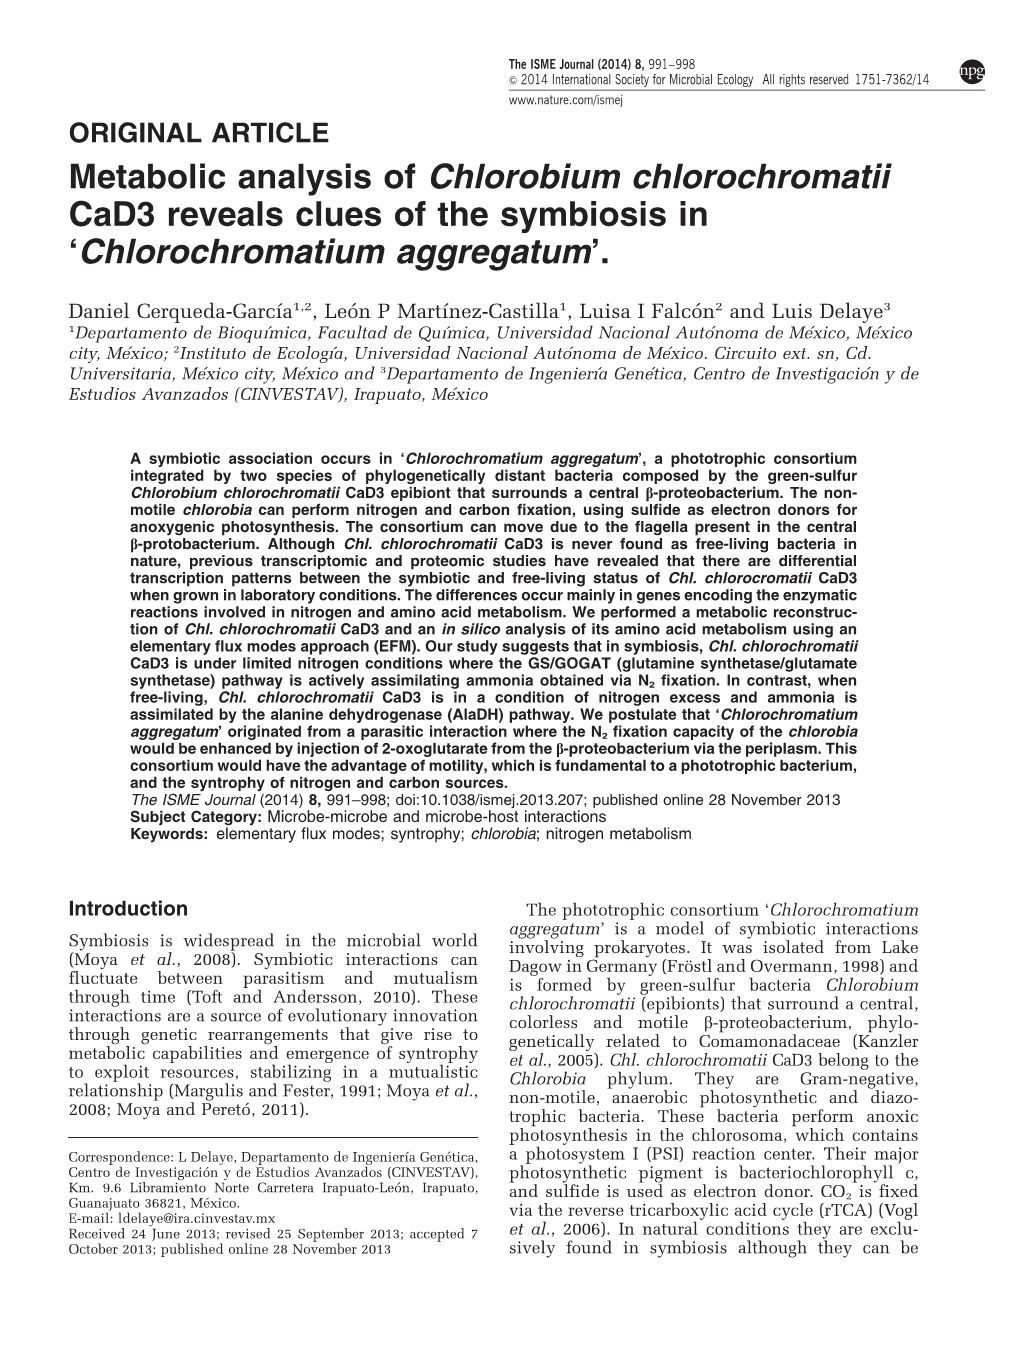 Metabolic Analysis of Chlorobium Chlorochromatii Cad3 Reveals Clues of the Symbiosis in ‘Chlorochromatium Aggregatum’